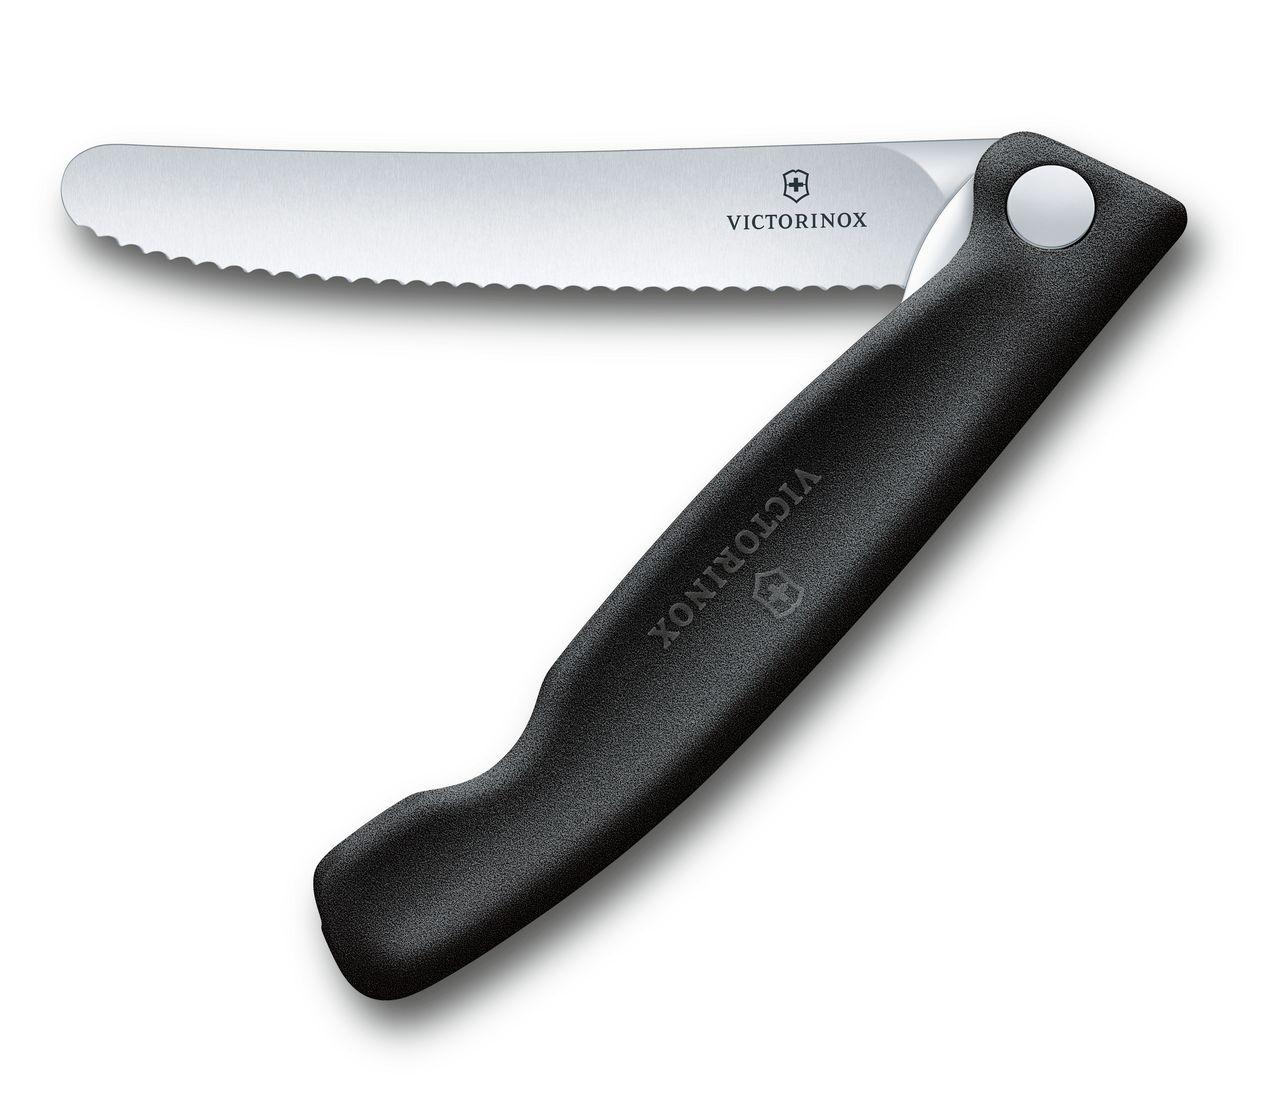 Victorinox Swiss Classic Paring Knife in black - 6.7633